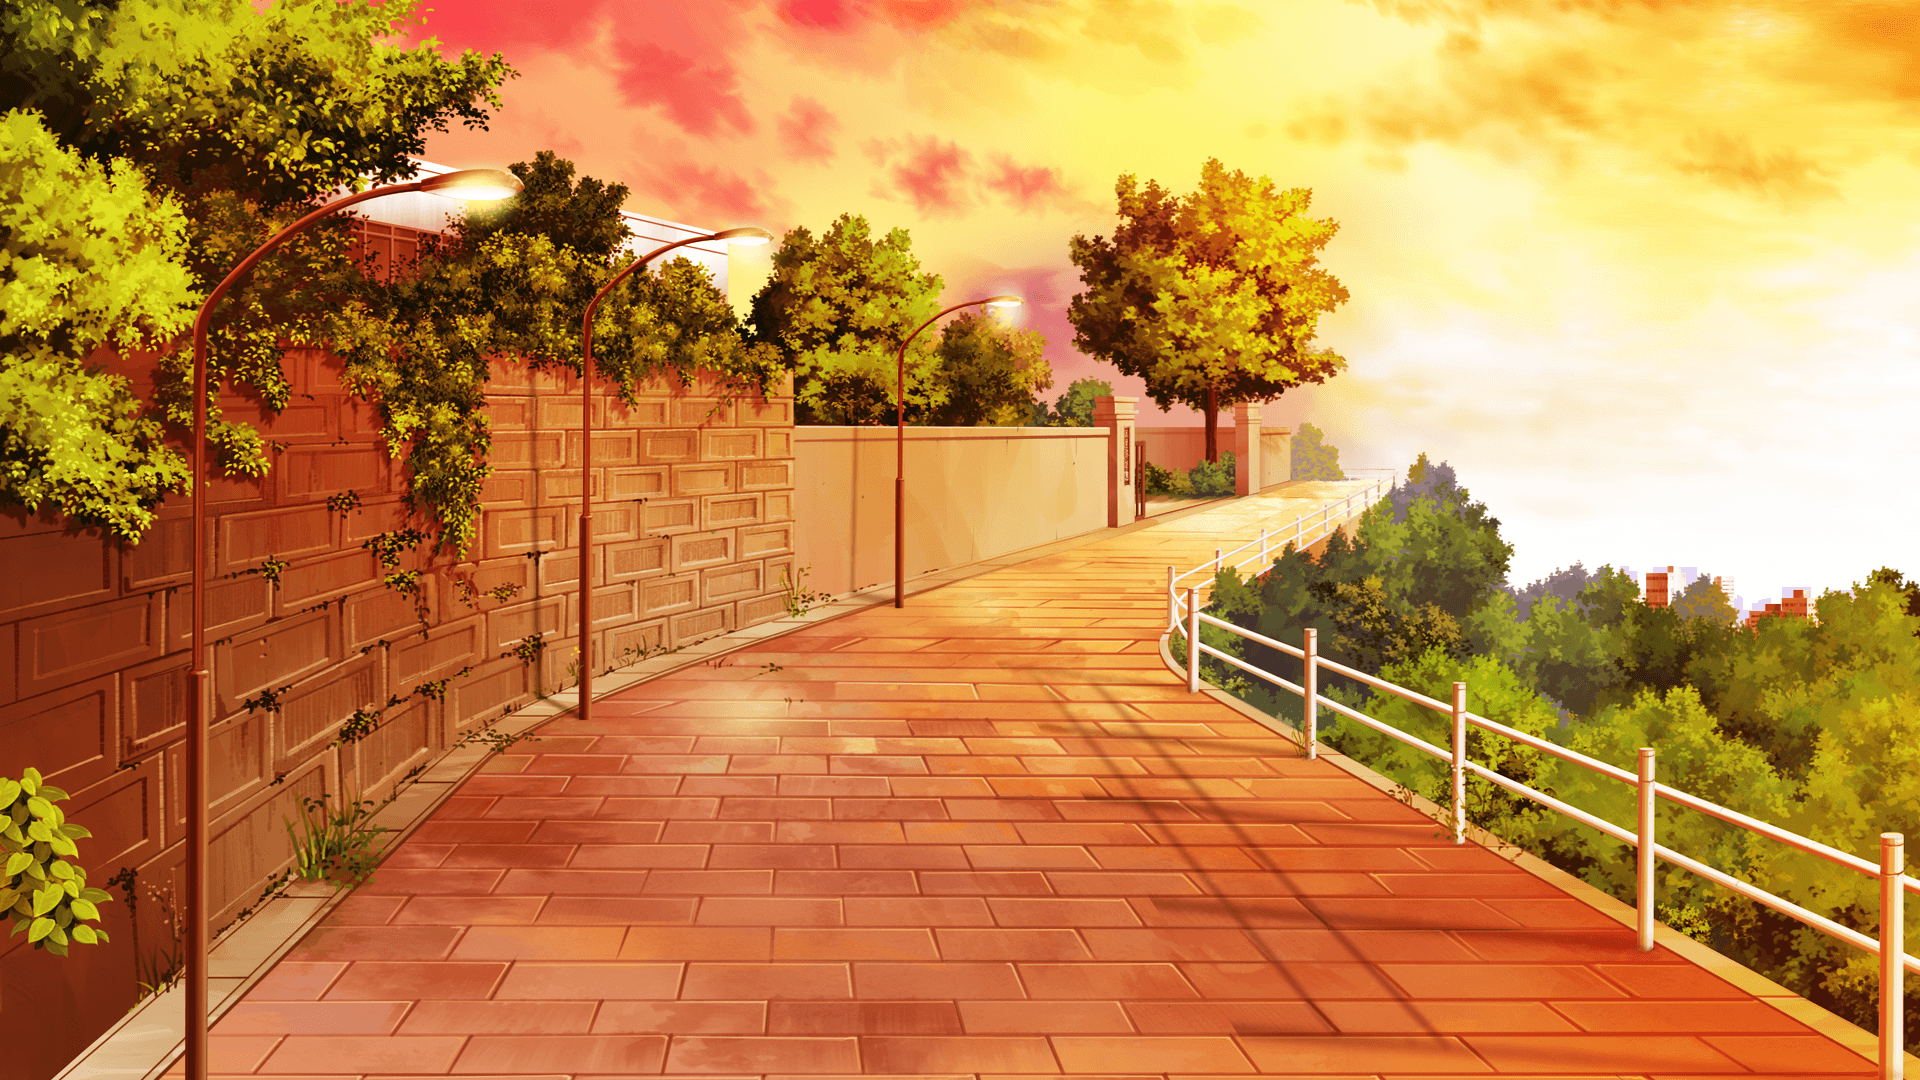 Anime City Scenery Wallpaper Widescreen 2 HD Wallpaper. Screen